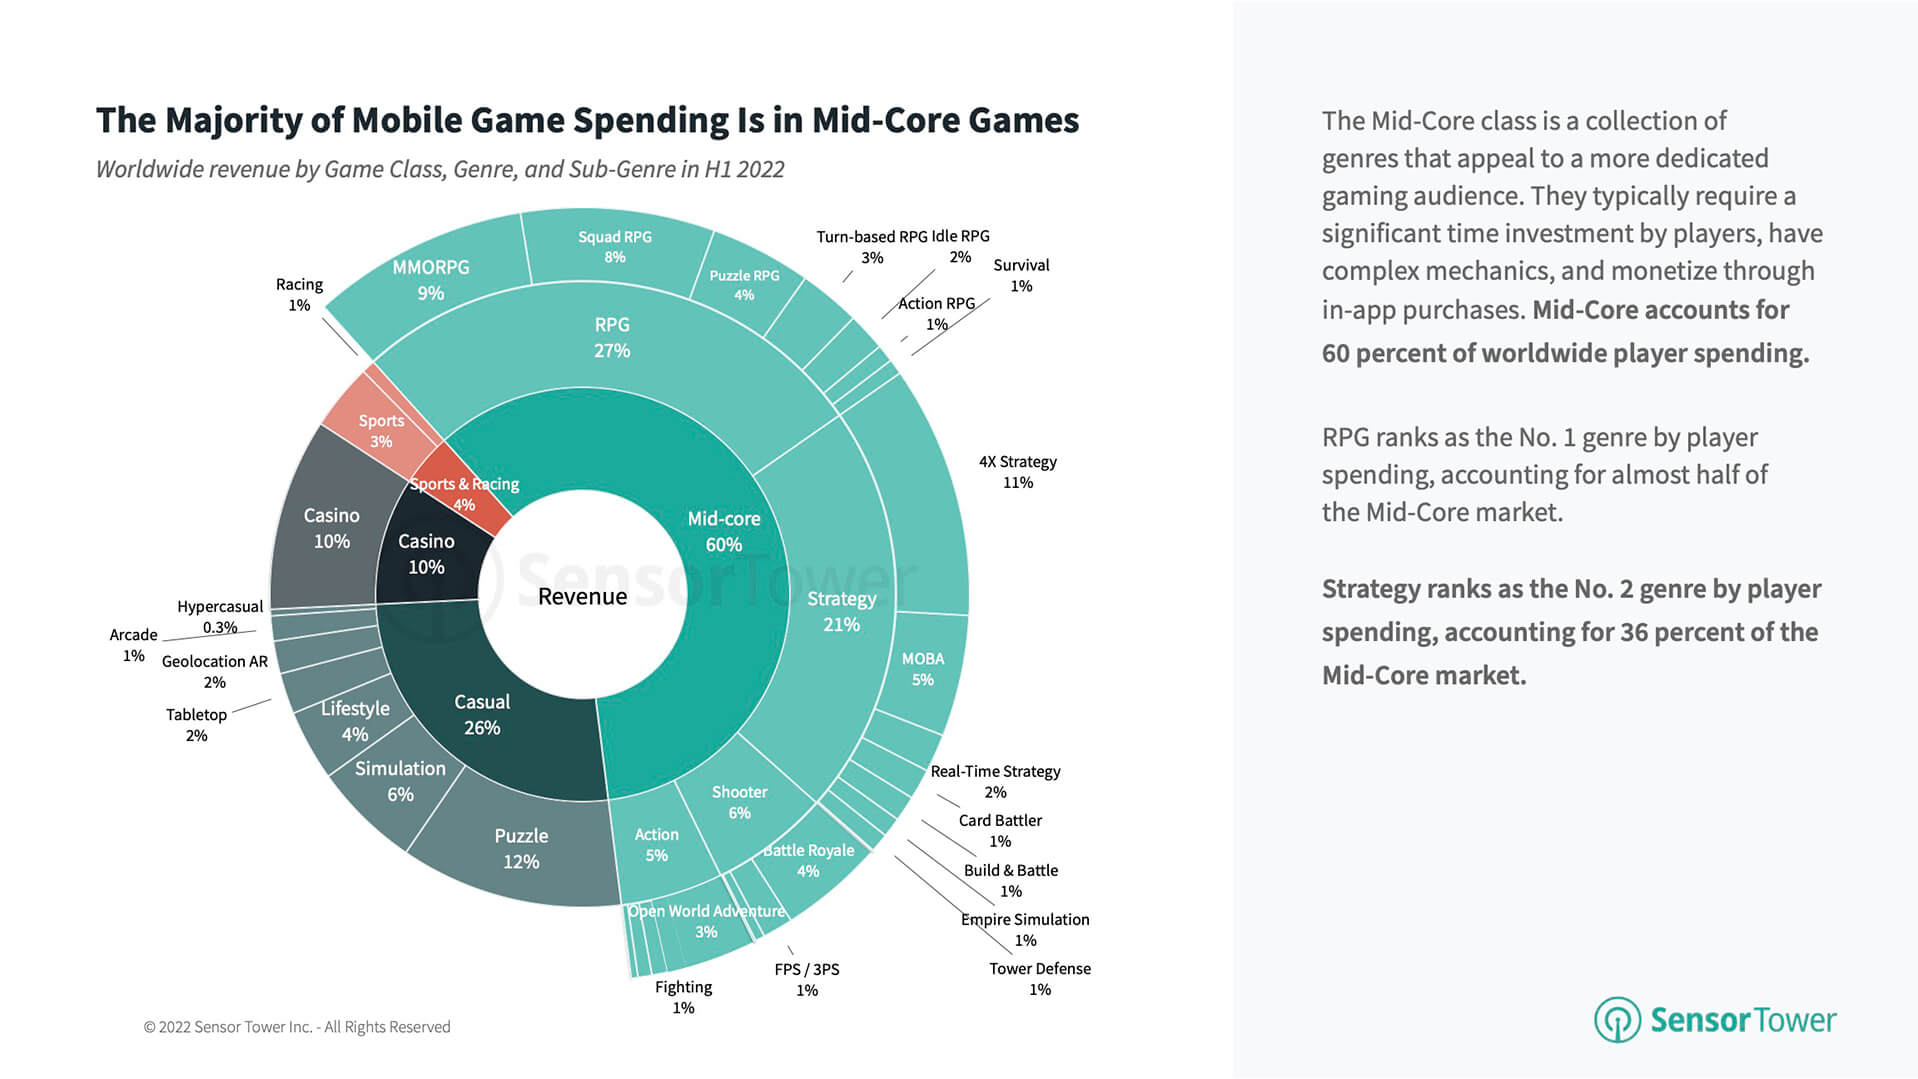 mobile-gaming-market-outlook-2022-genre-revenue-breakdown